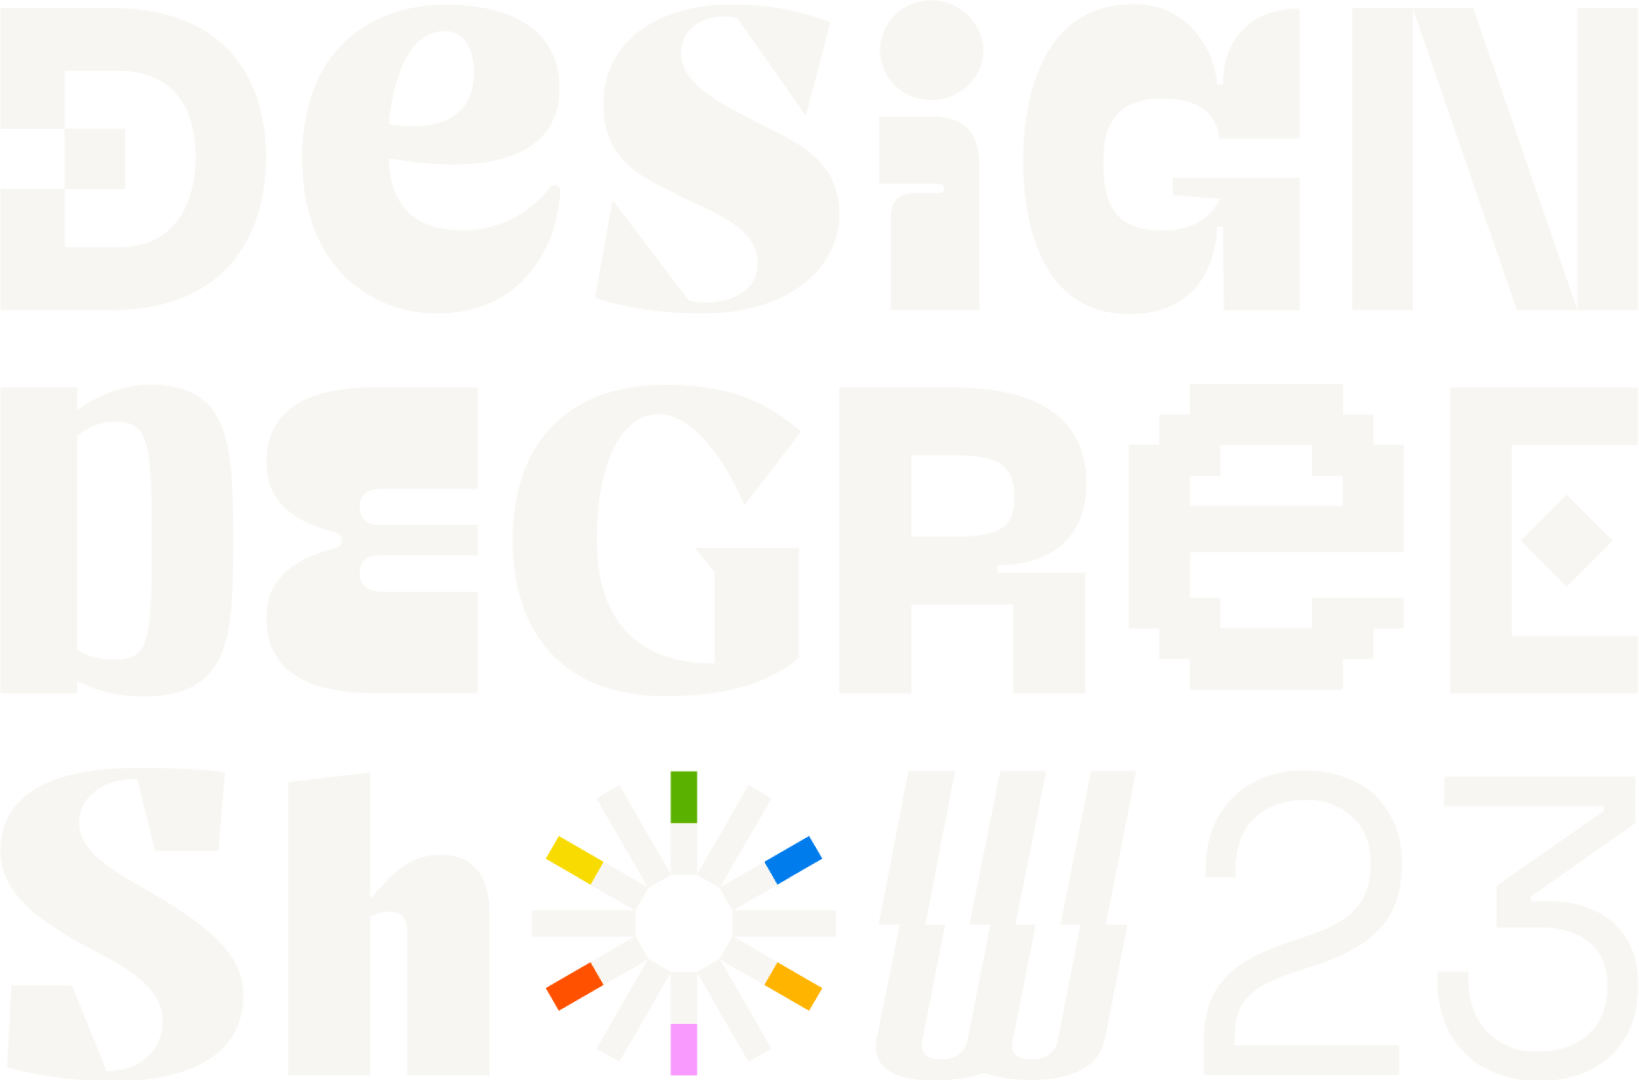 Design & Degree Showcase 23